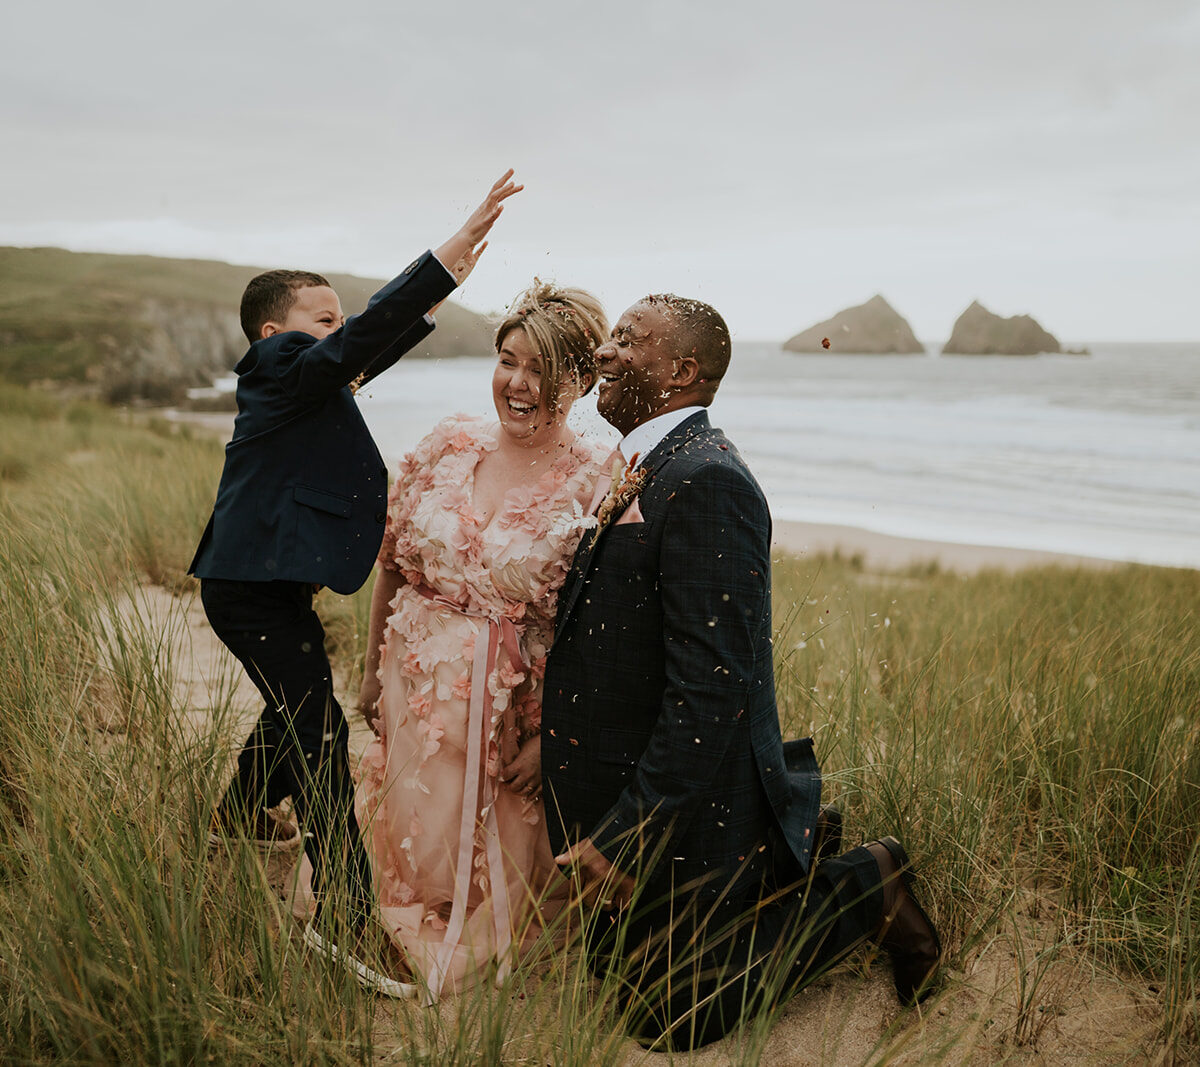 Family fun - throwing confetti in the Cornish sand dunes